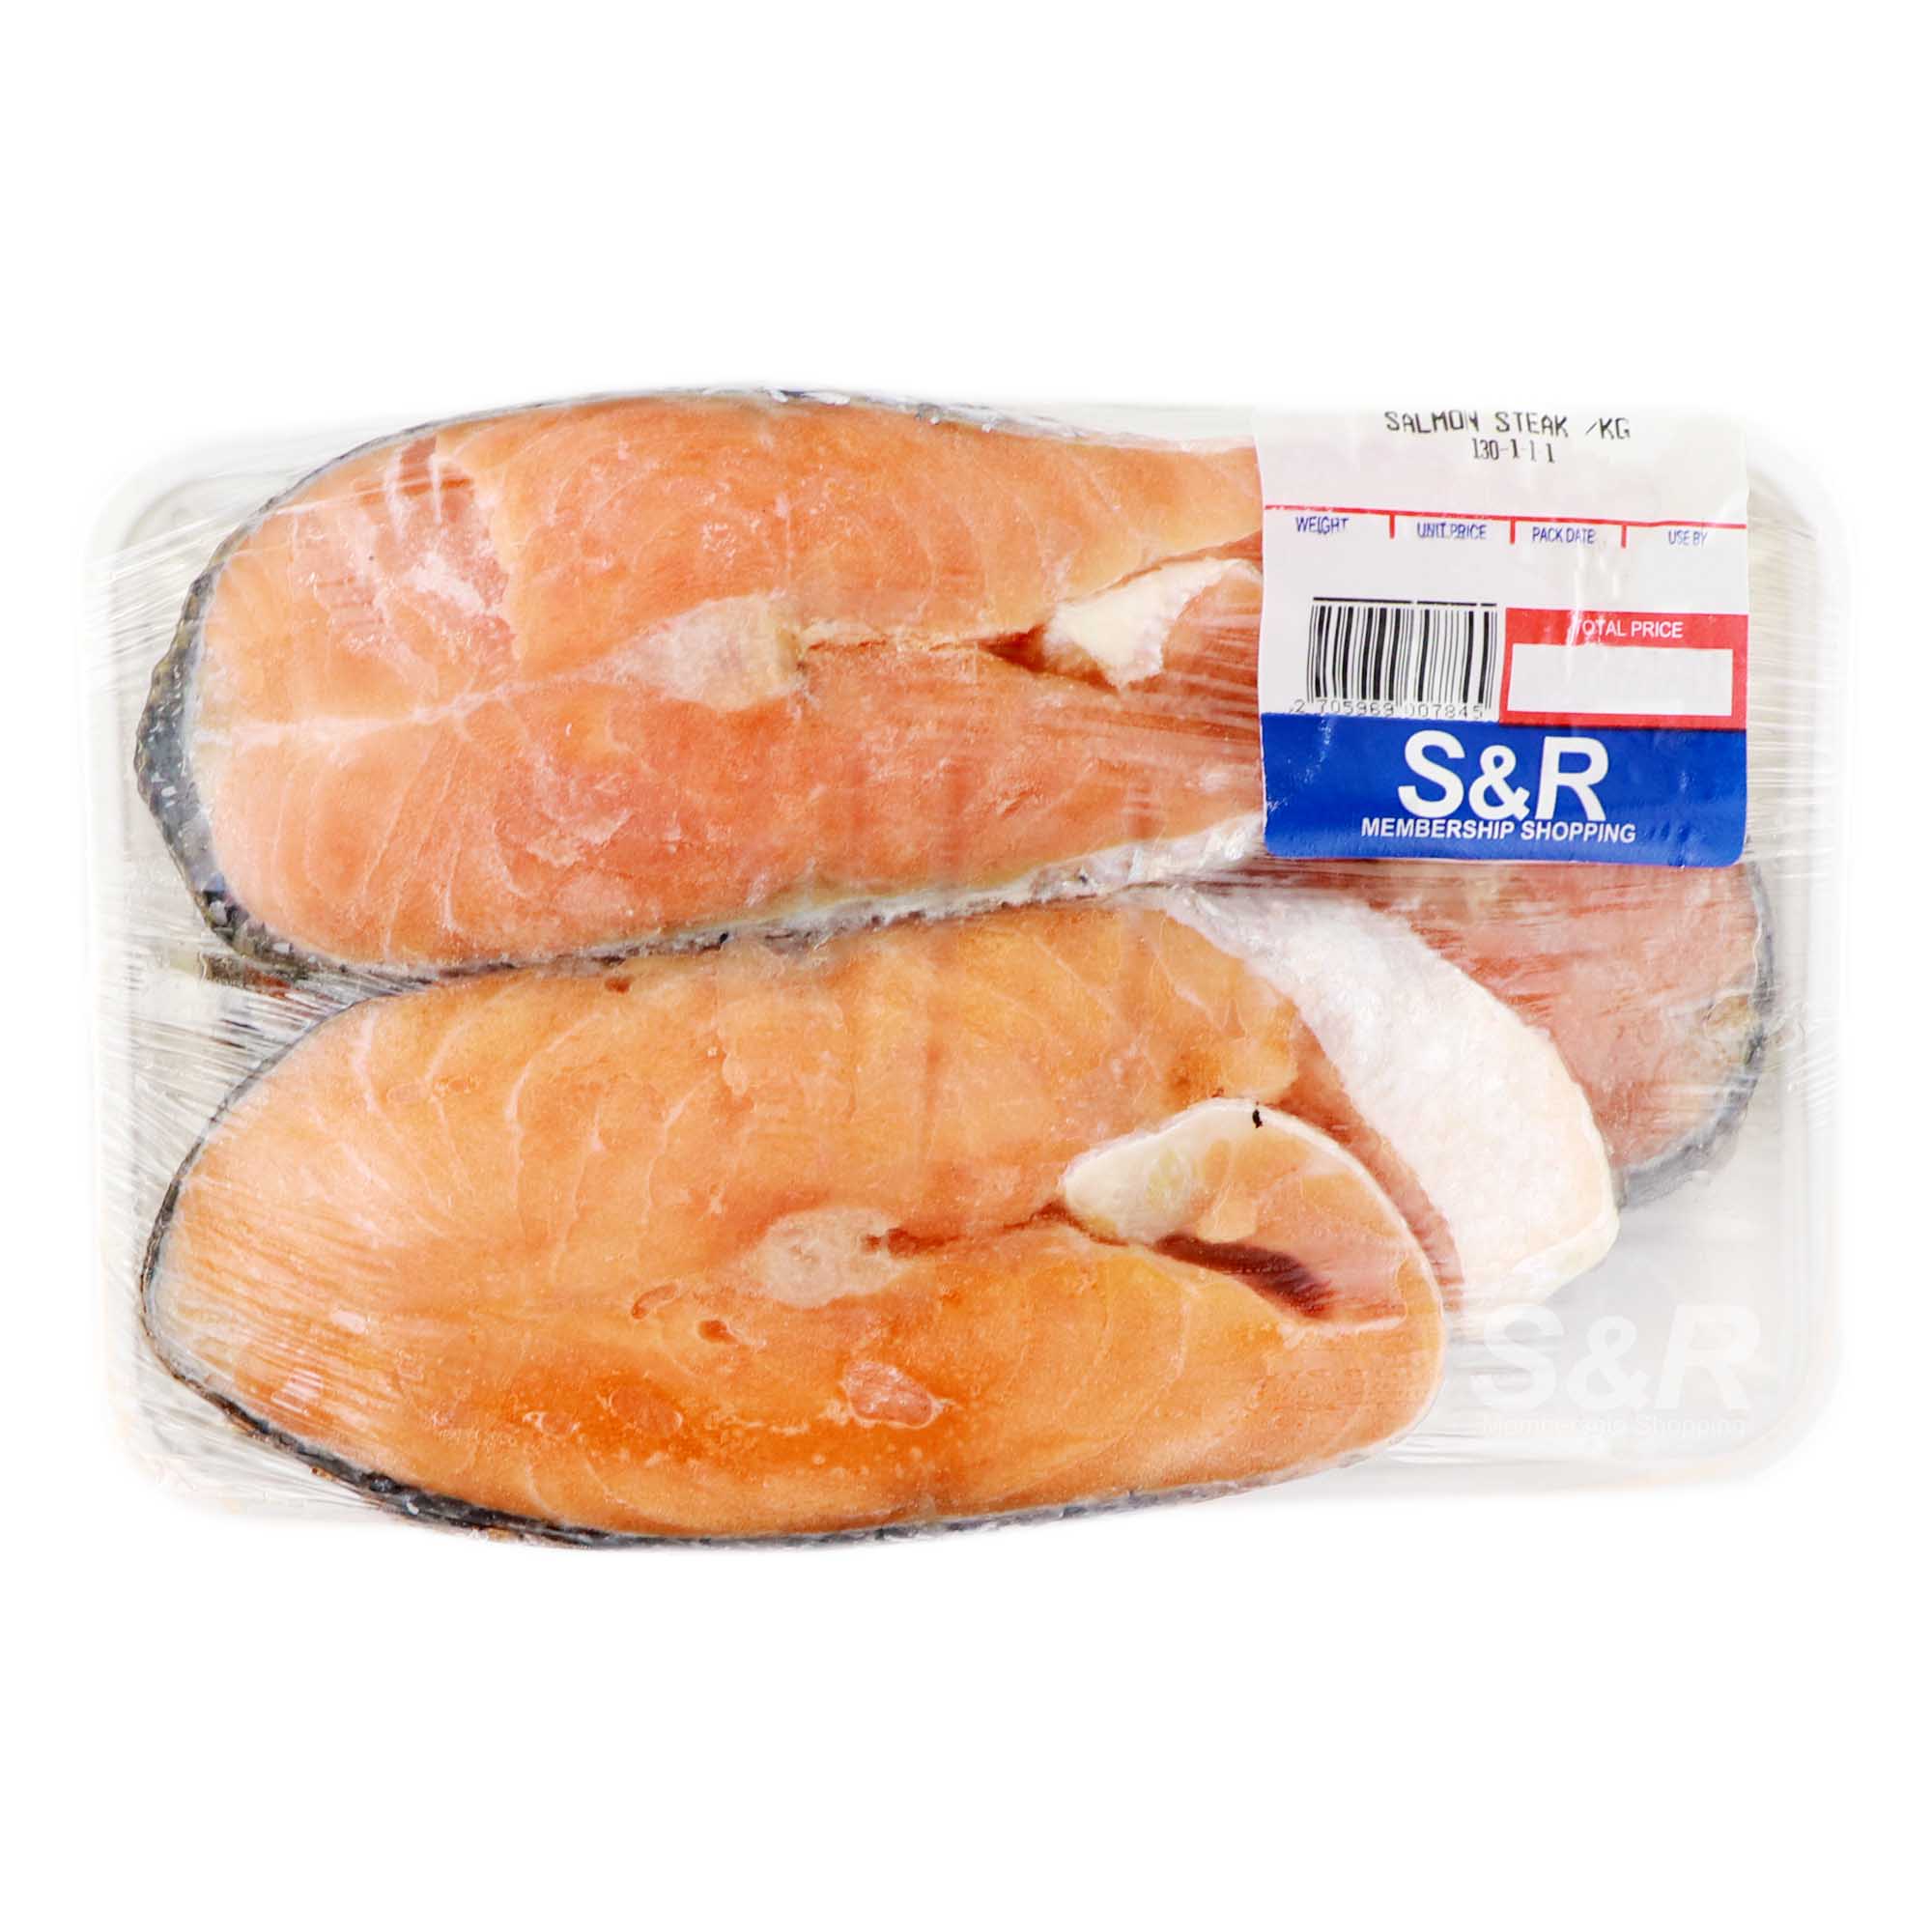 S&R Salmon Steak approx. 1.3kg